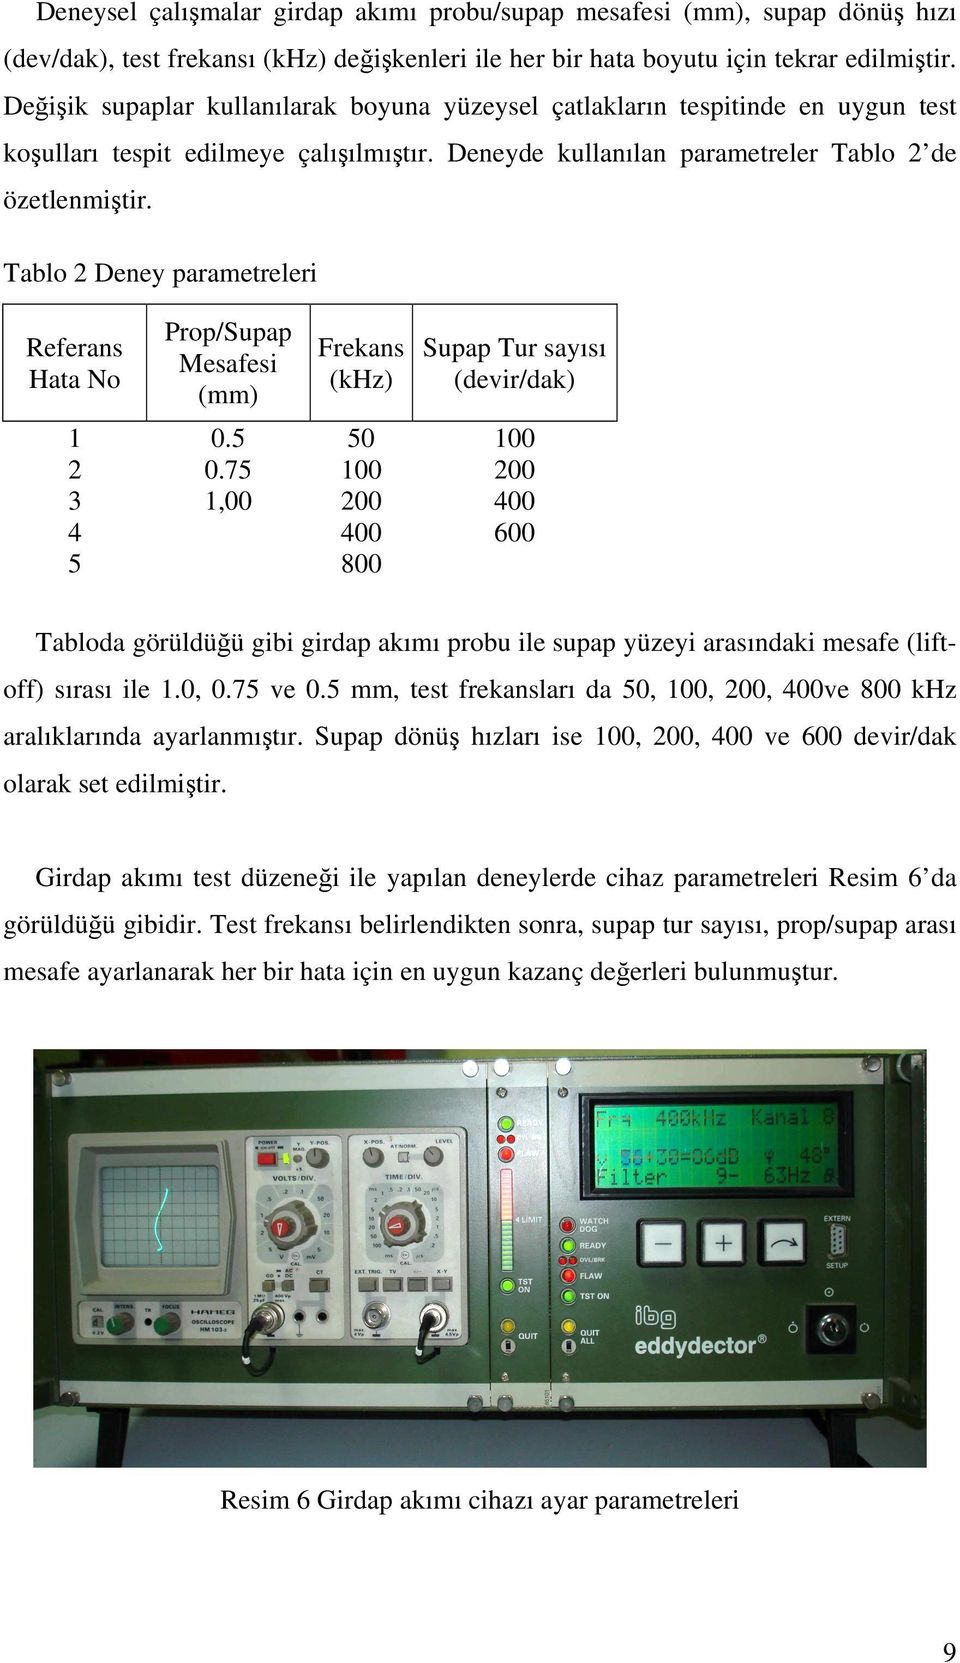 Tablo 2 Deney parametreleri Referans Hata No Prop/Supap Mesafesi (mm) Frekans (khz) Supap Tur sayısı (devir/dak) 1 0.5 50 100 2 0.